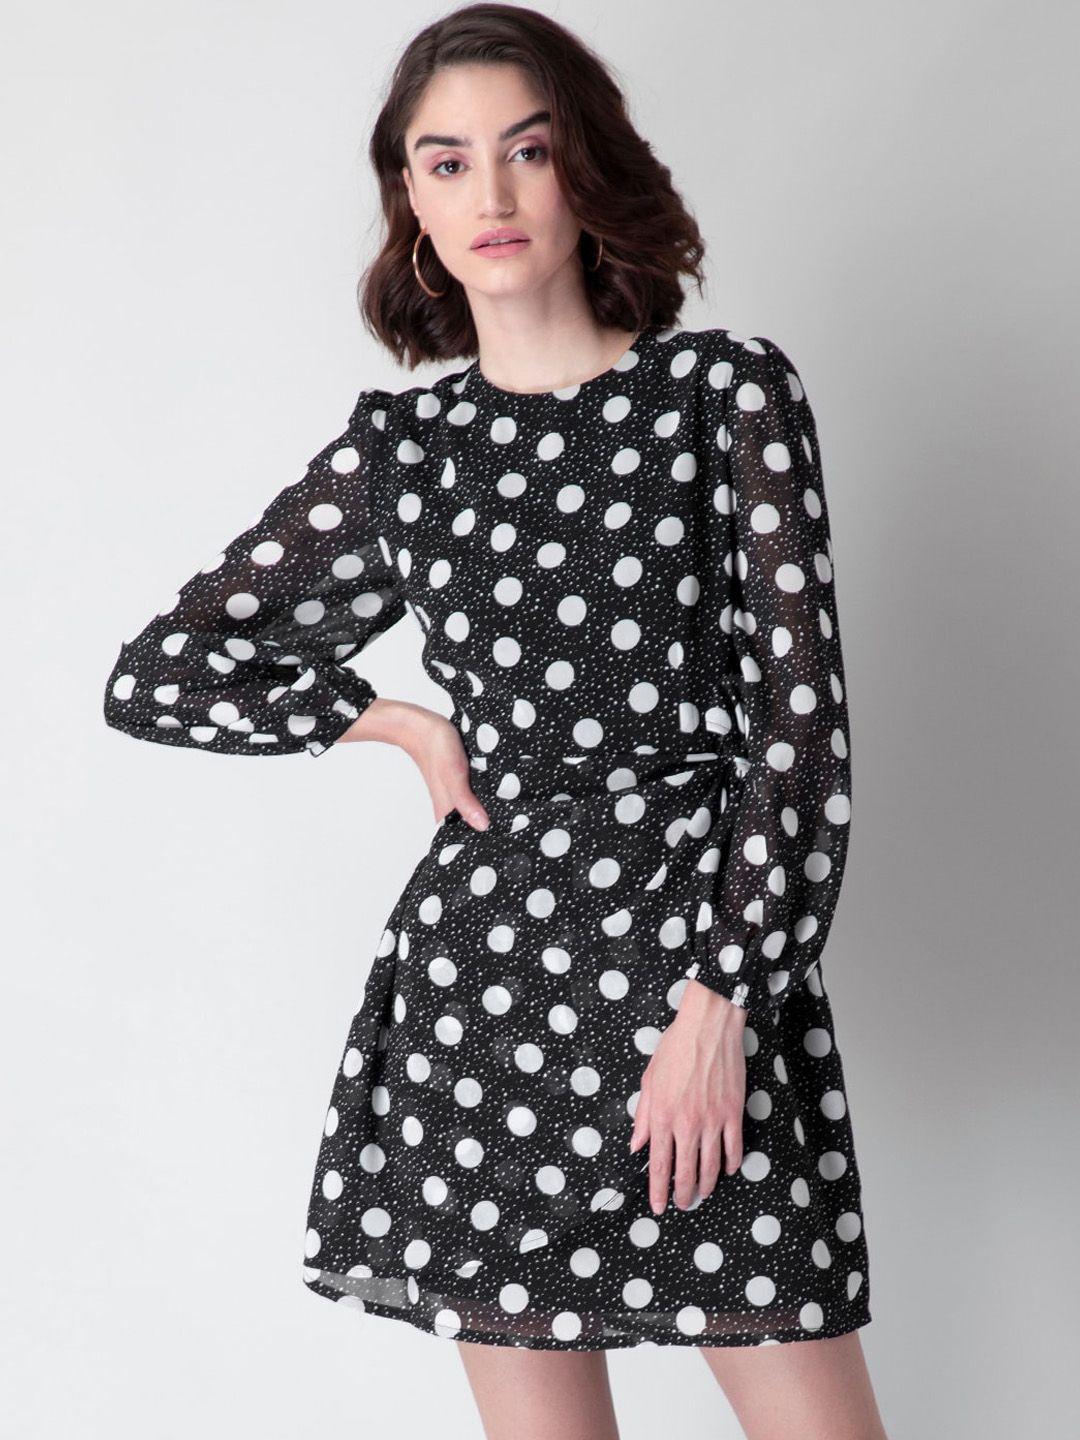 faballey-black-&-white-polka-dot-printed-dress